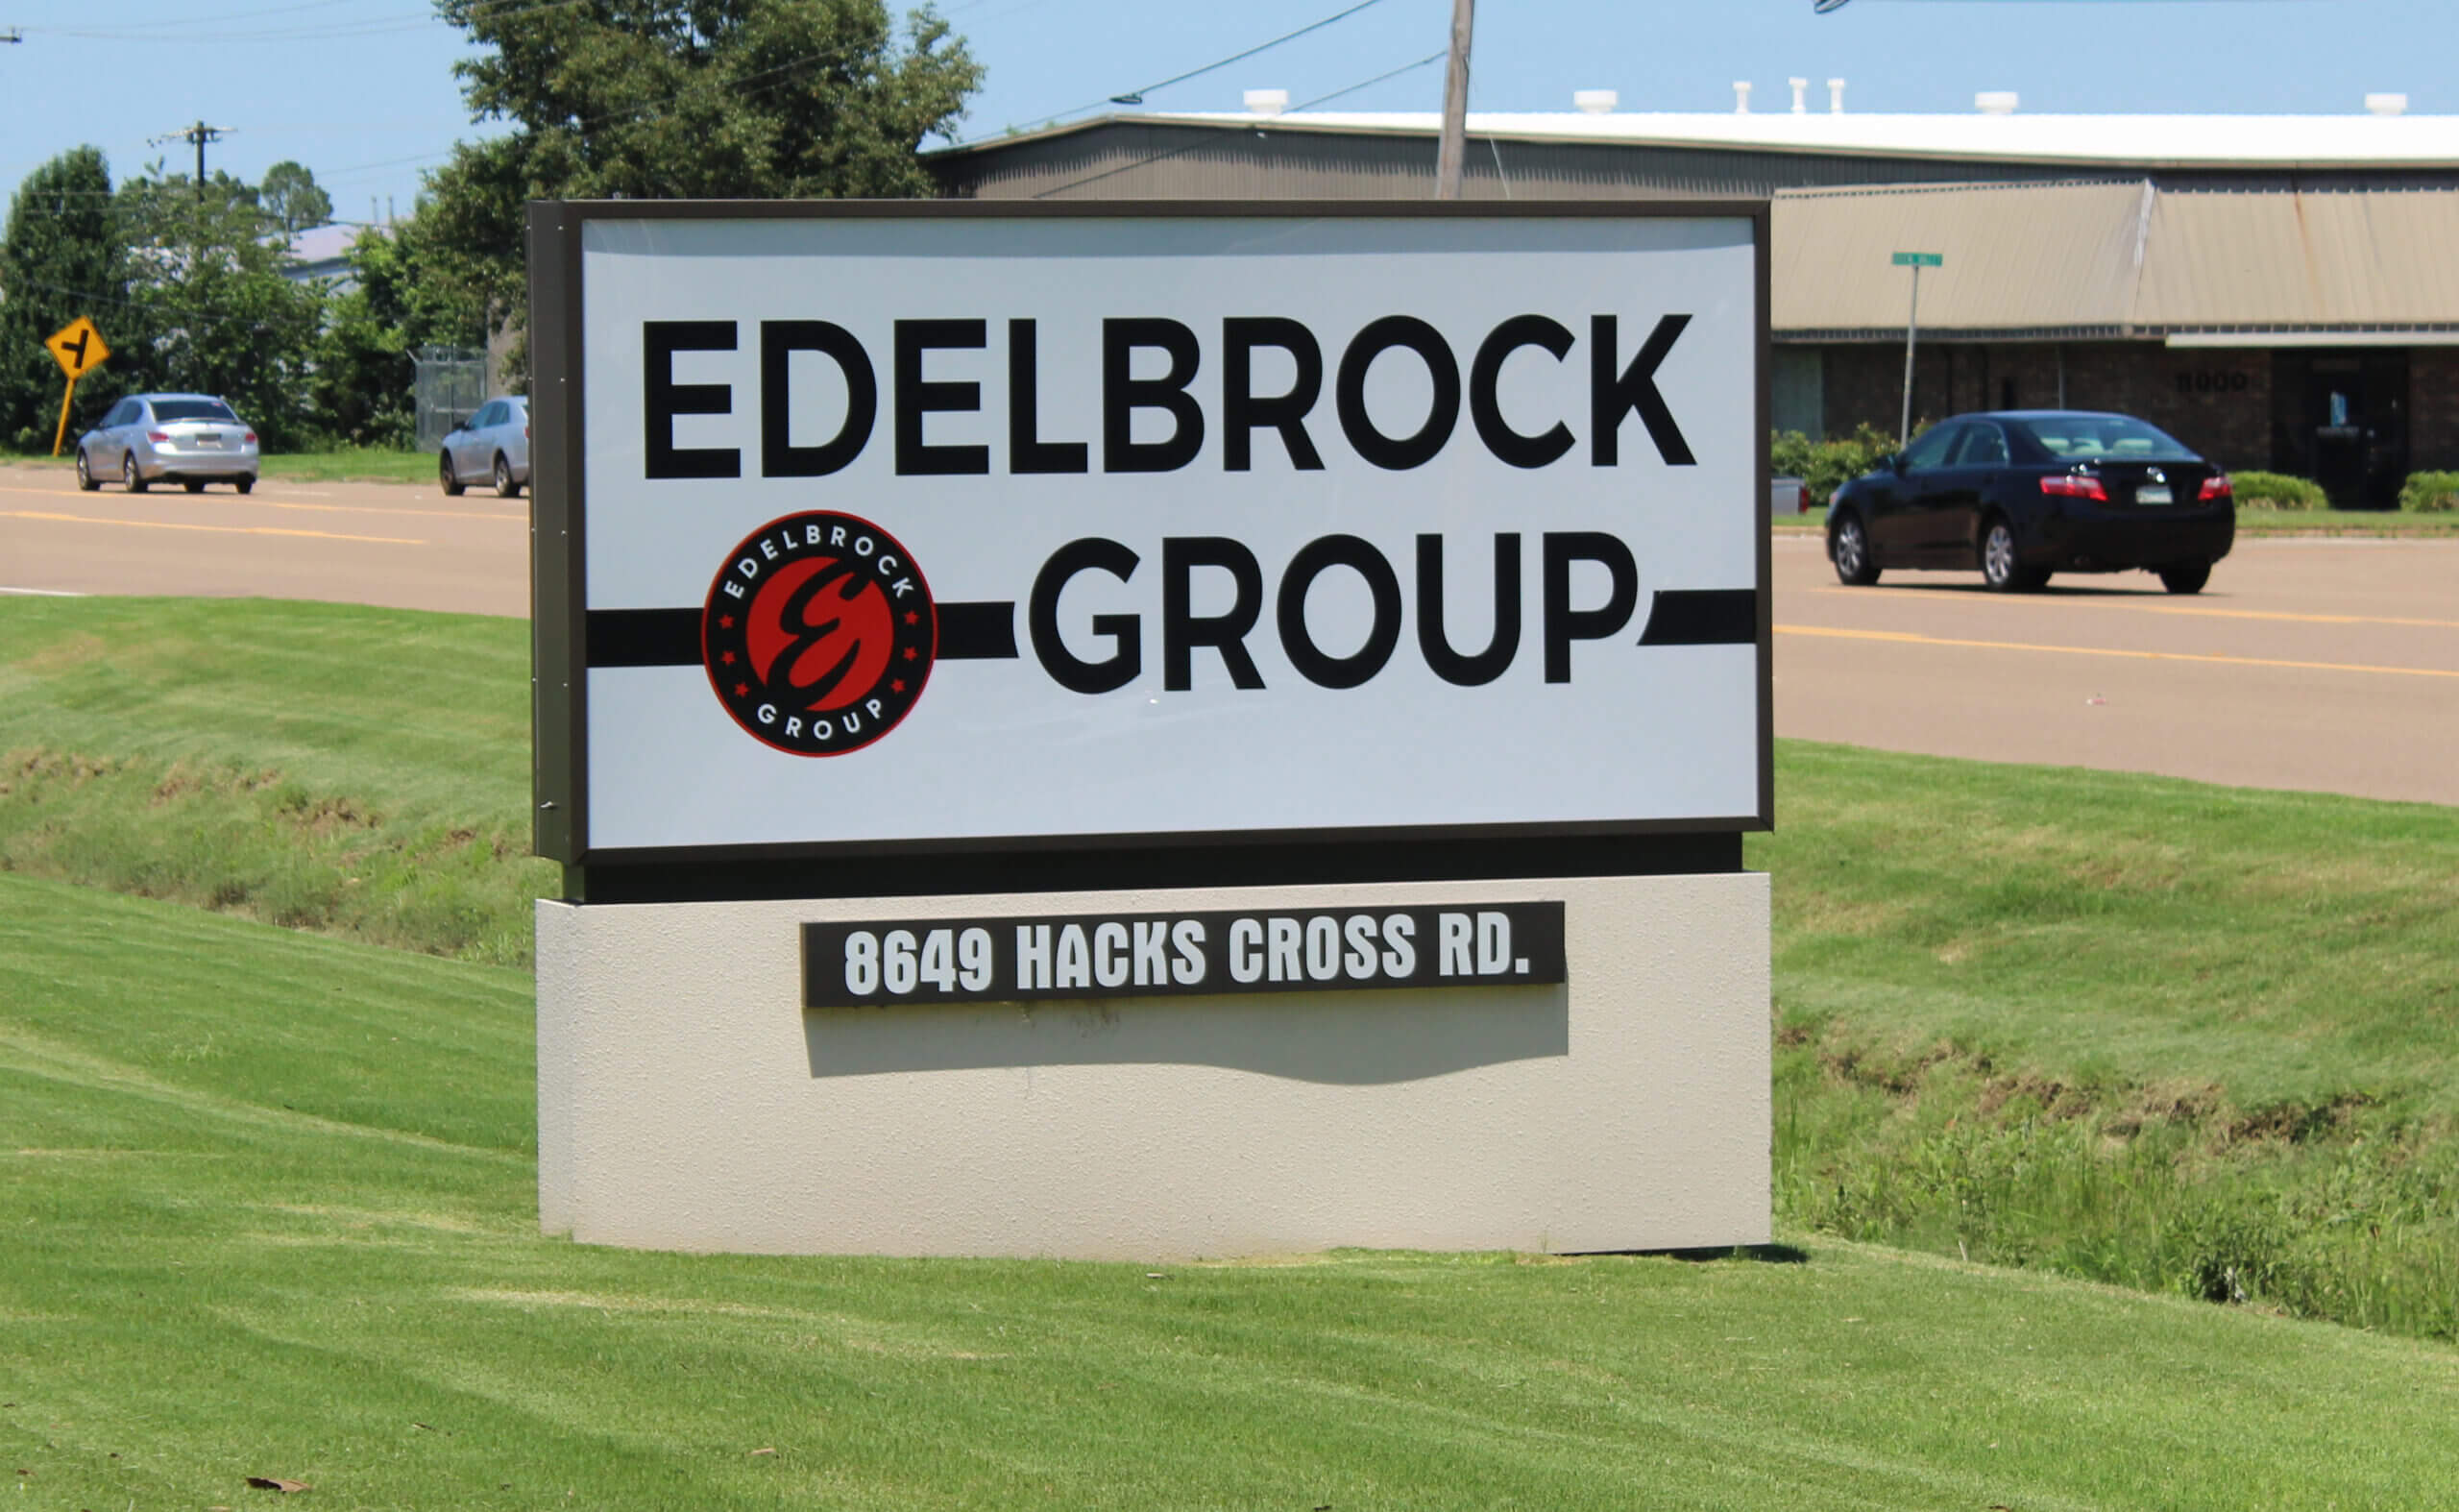 edelbrock group 2